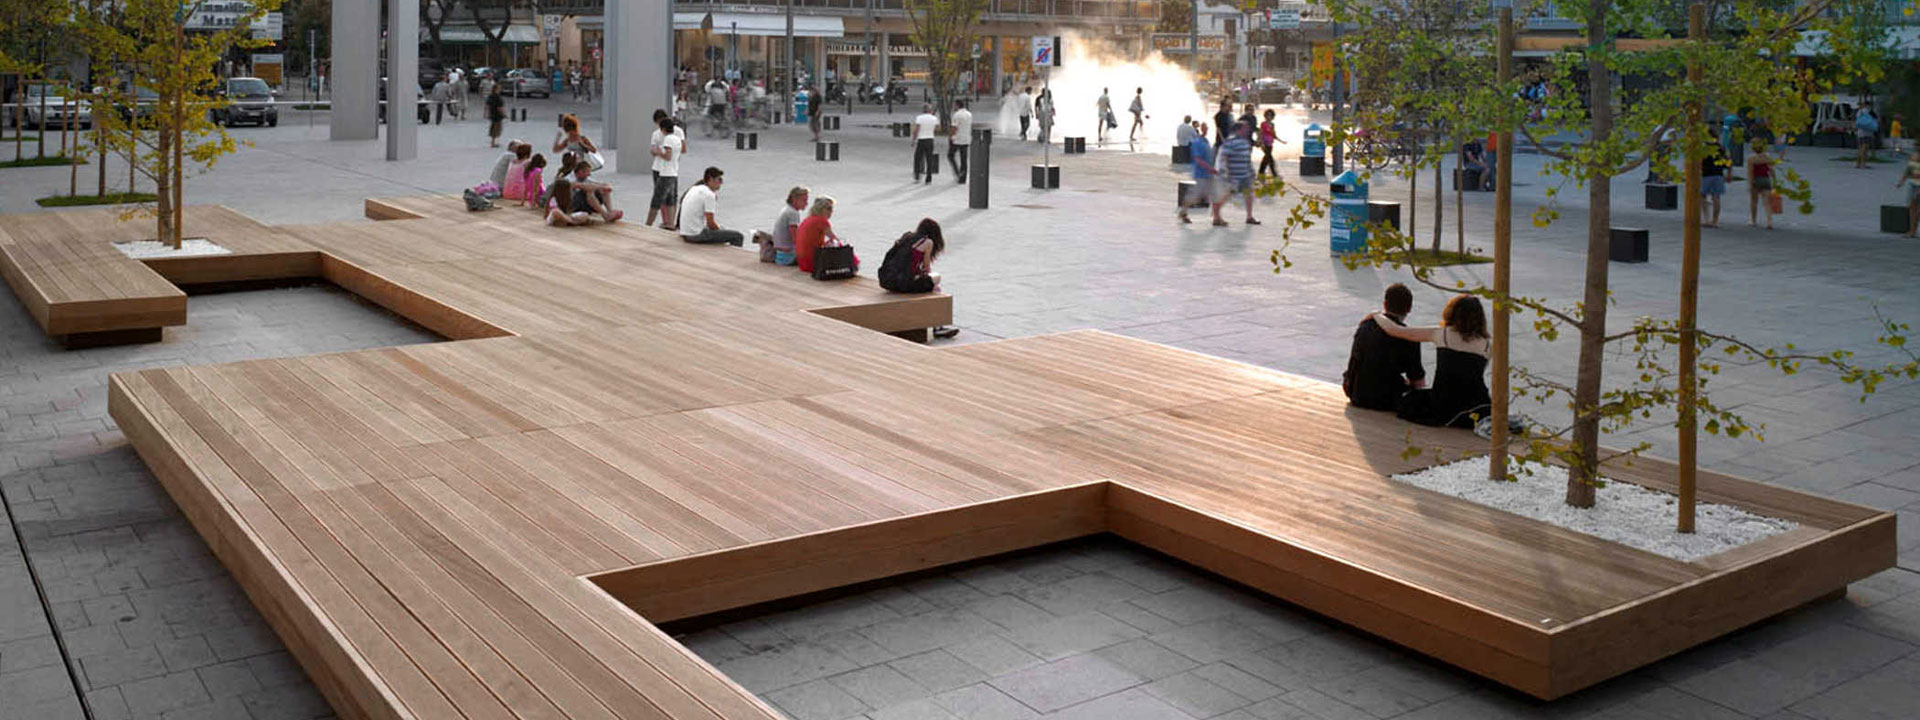 What Qualifies as Urban Furniture